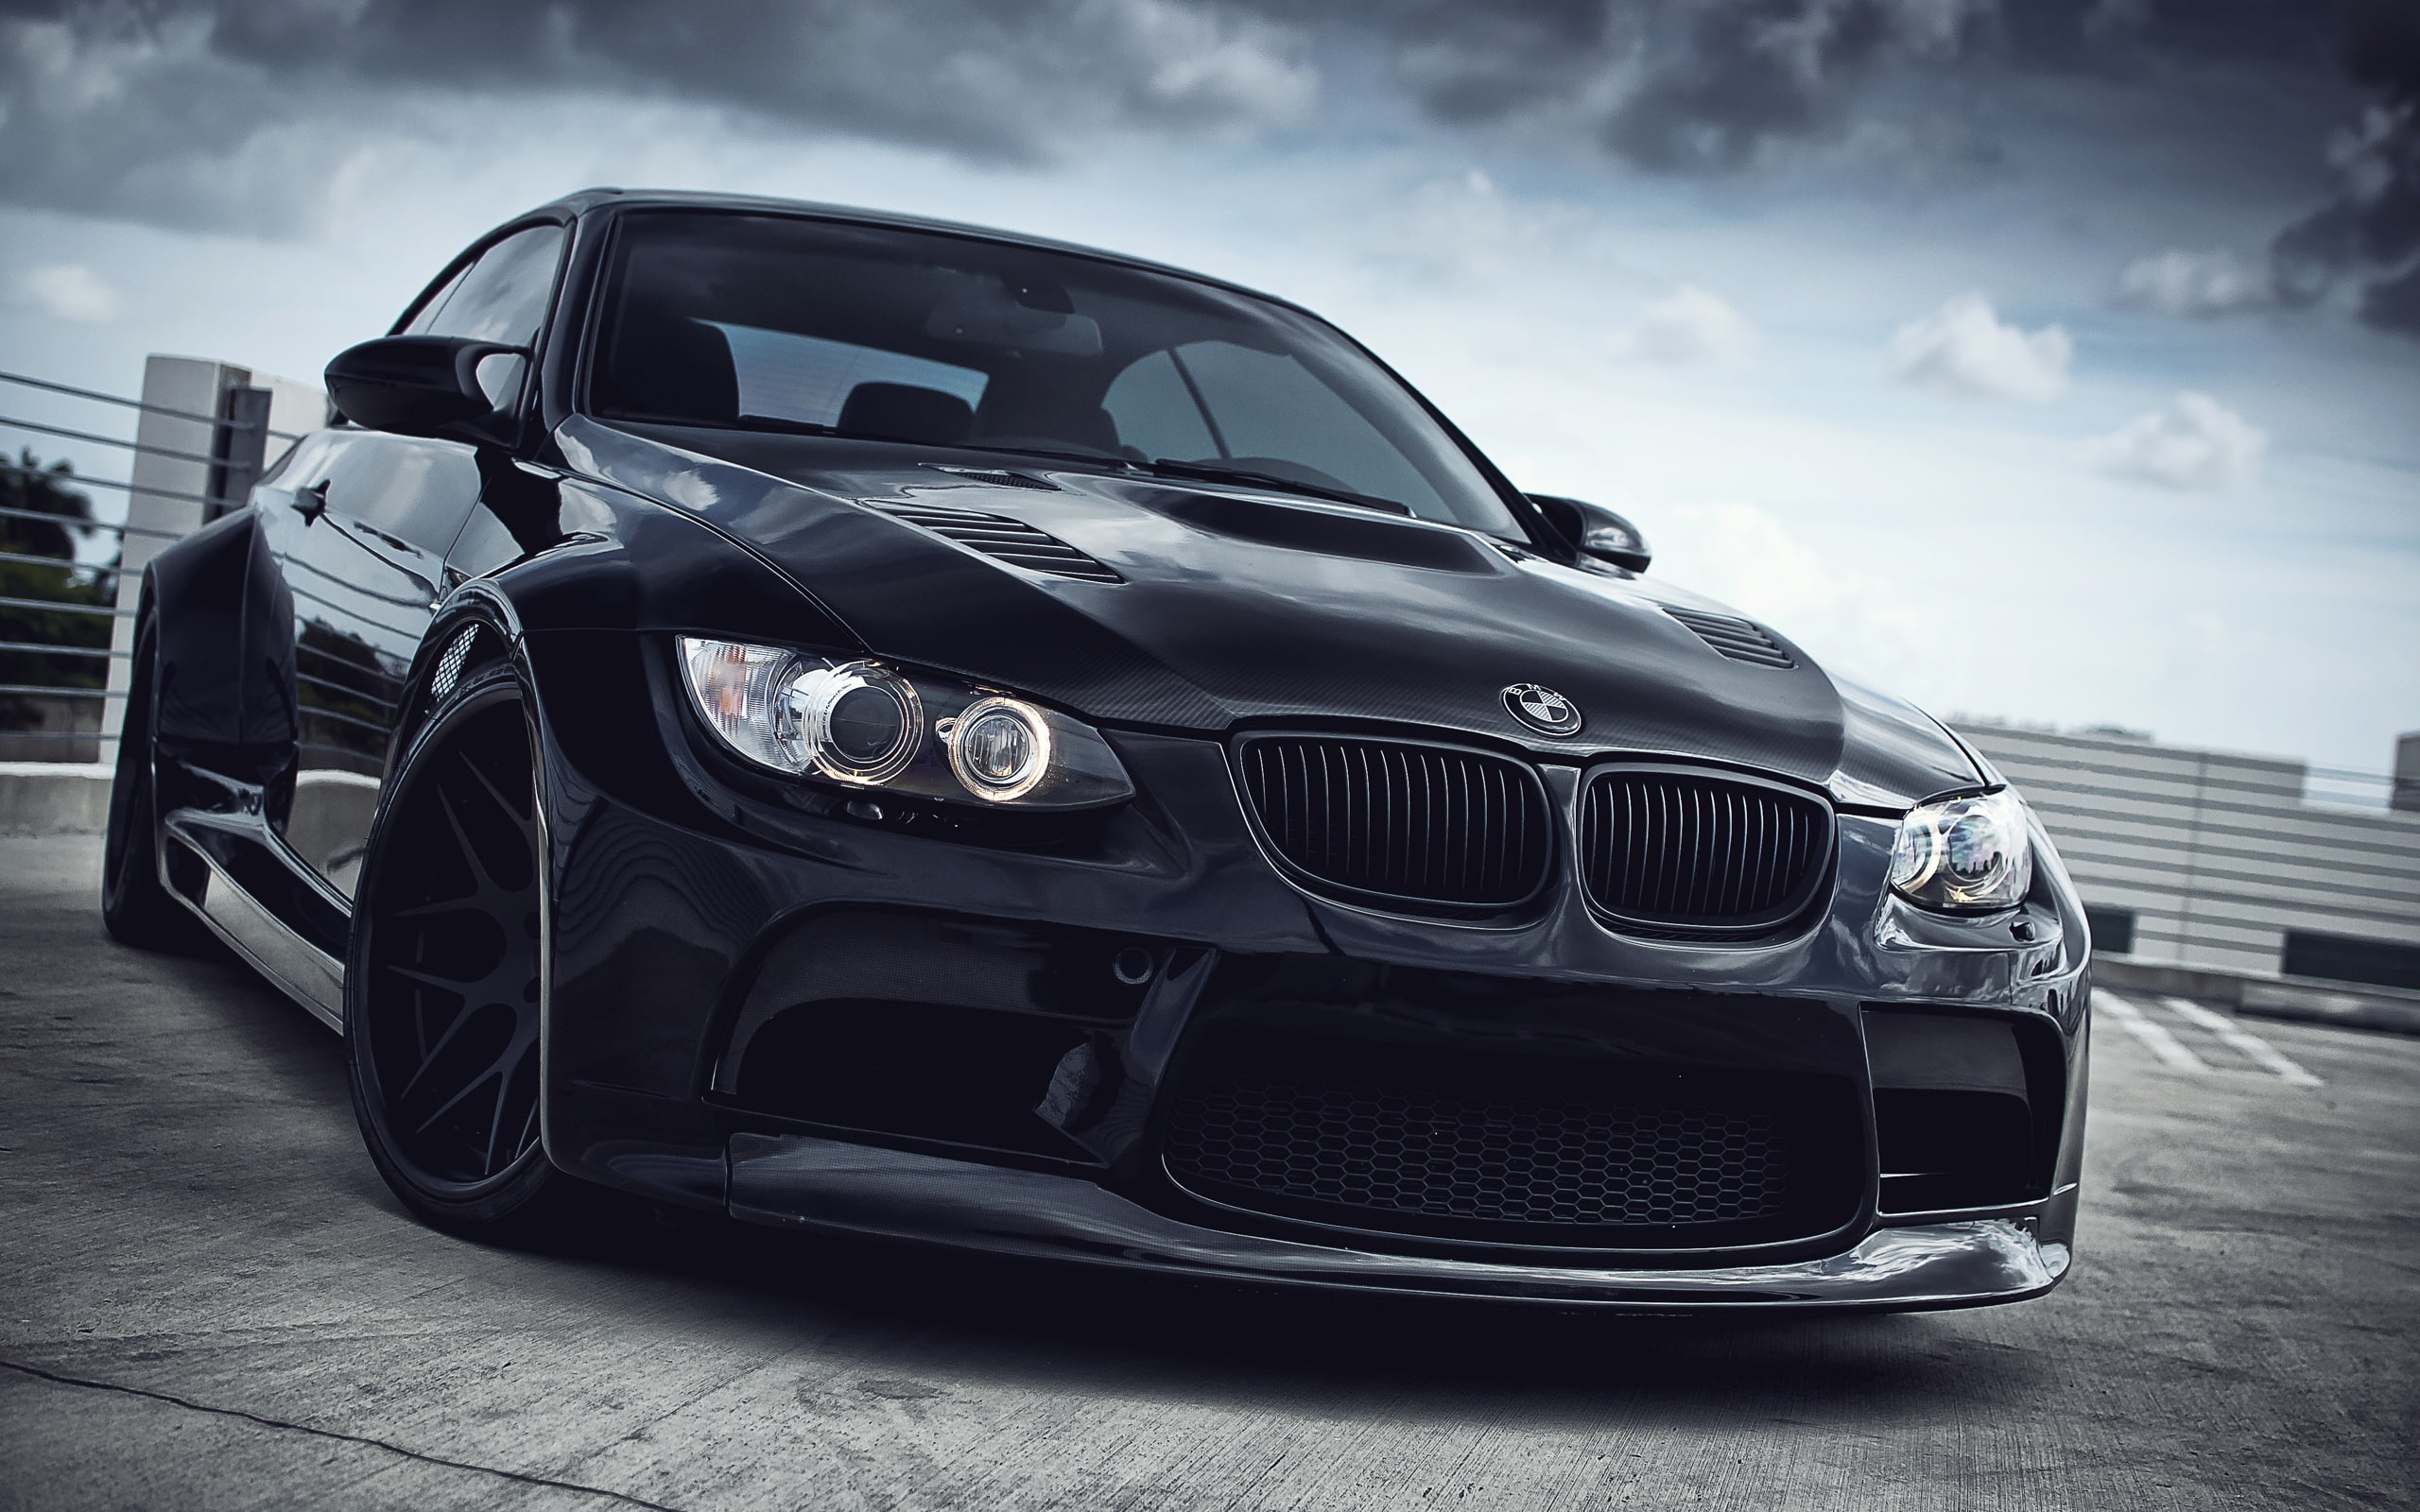 BMW M3 black car, black bmw m series